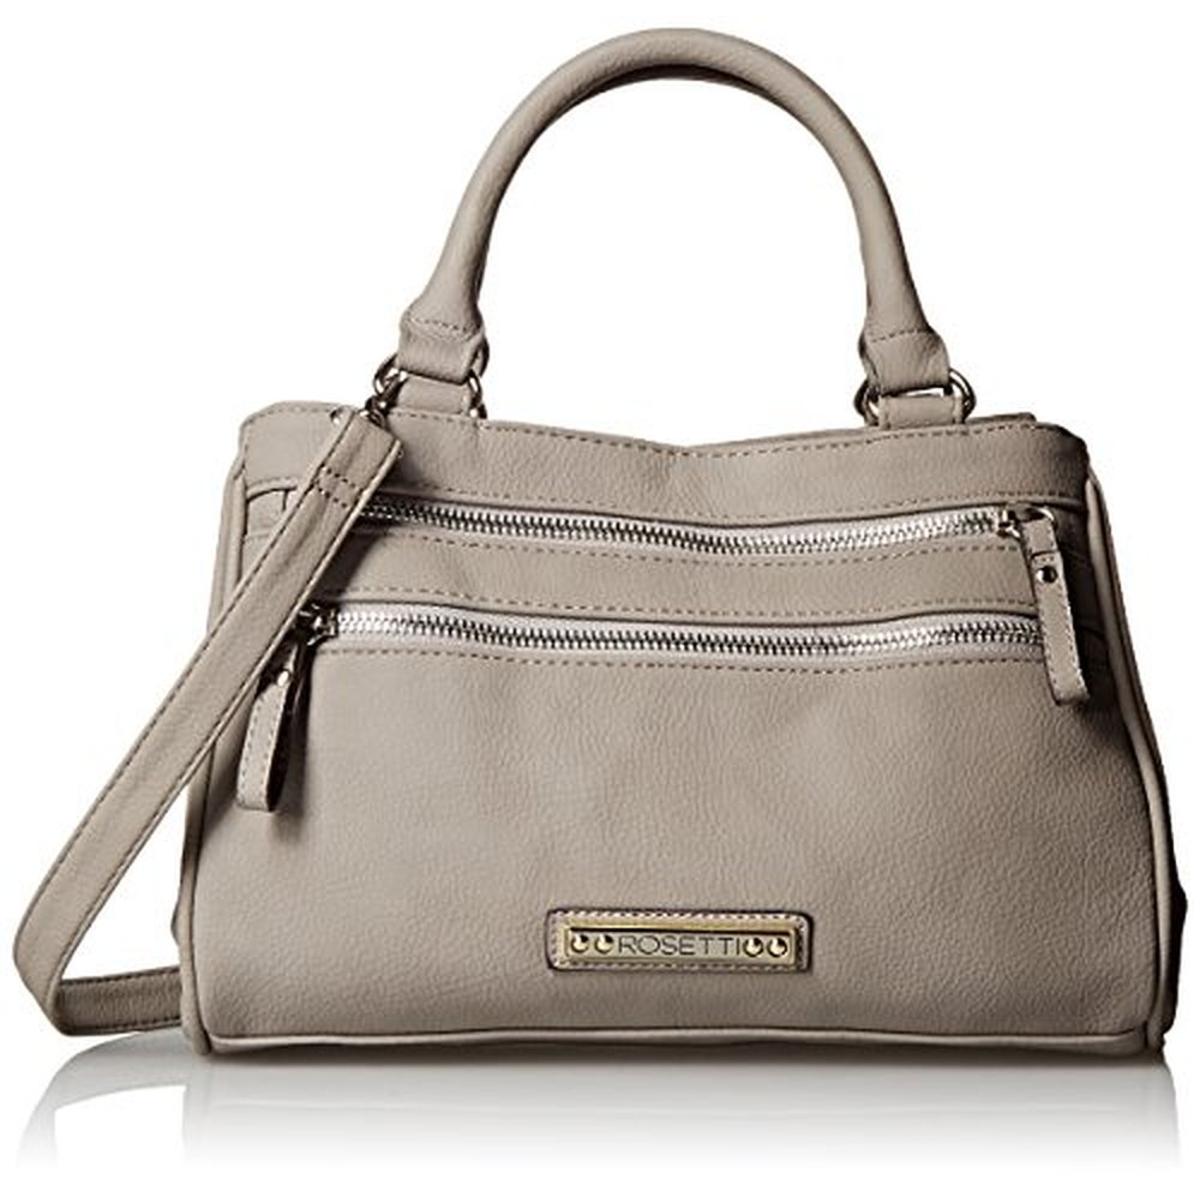 Rosetti 6373 Womens Charlotte Faux Leather Satchel Shoulder Handbag Purse BHFO | eBay